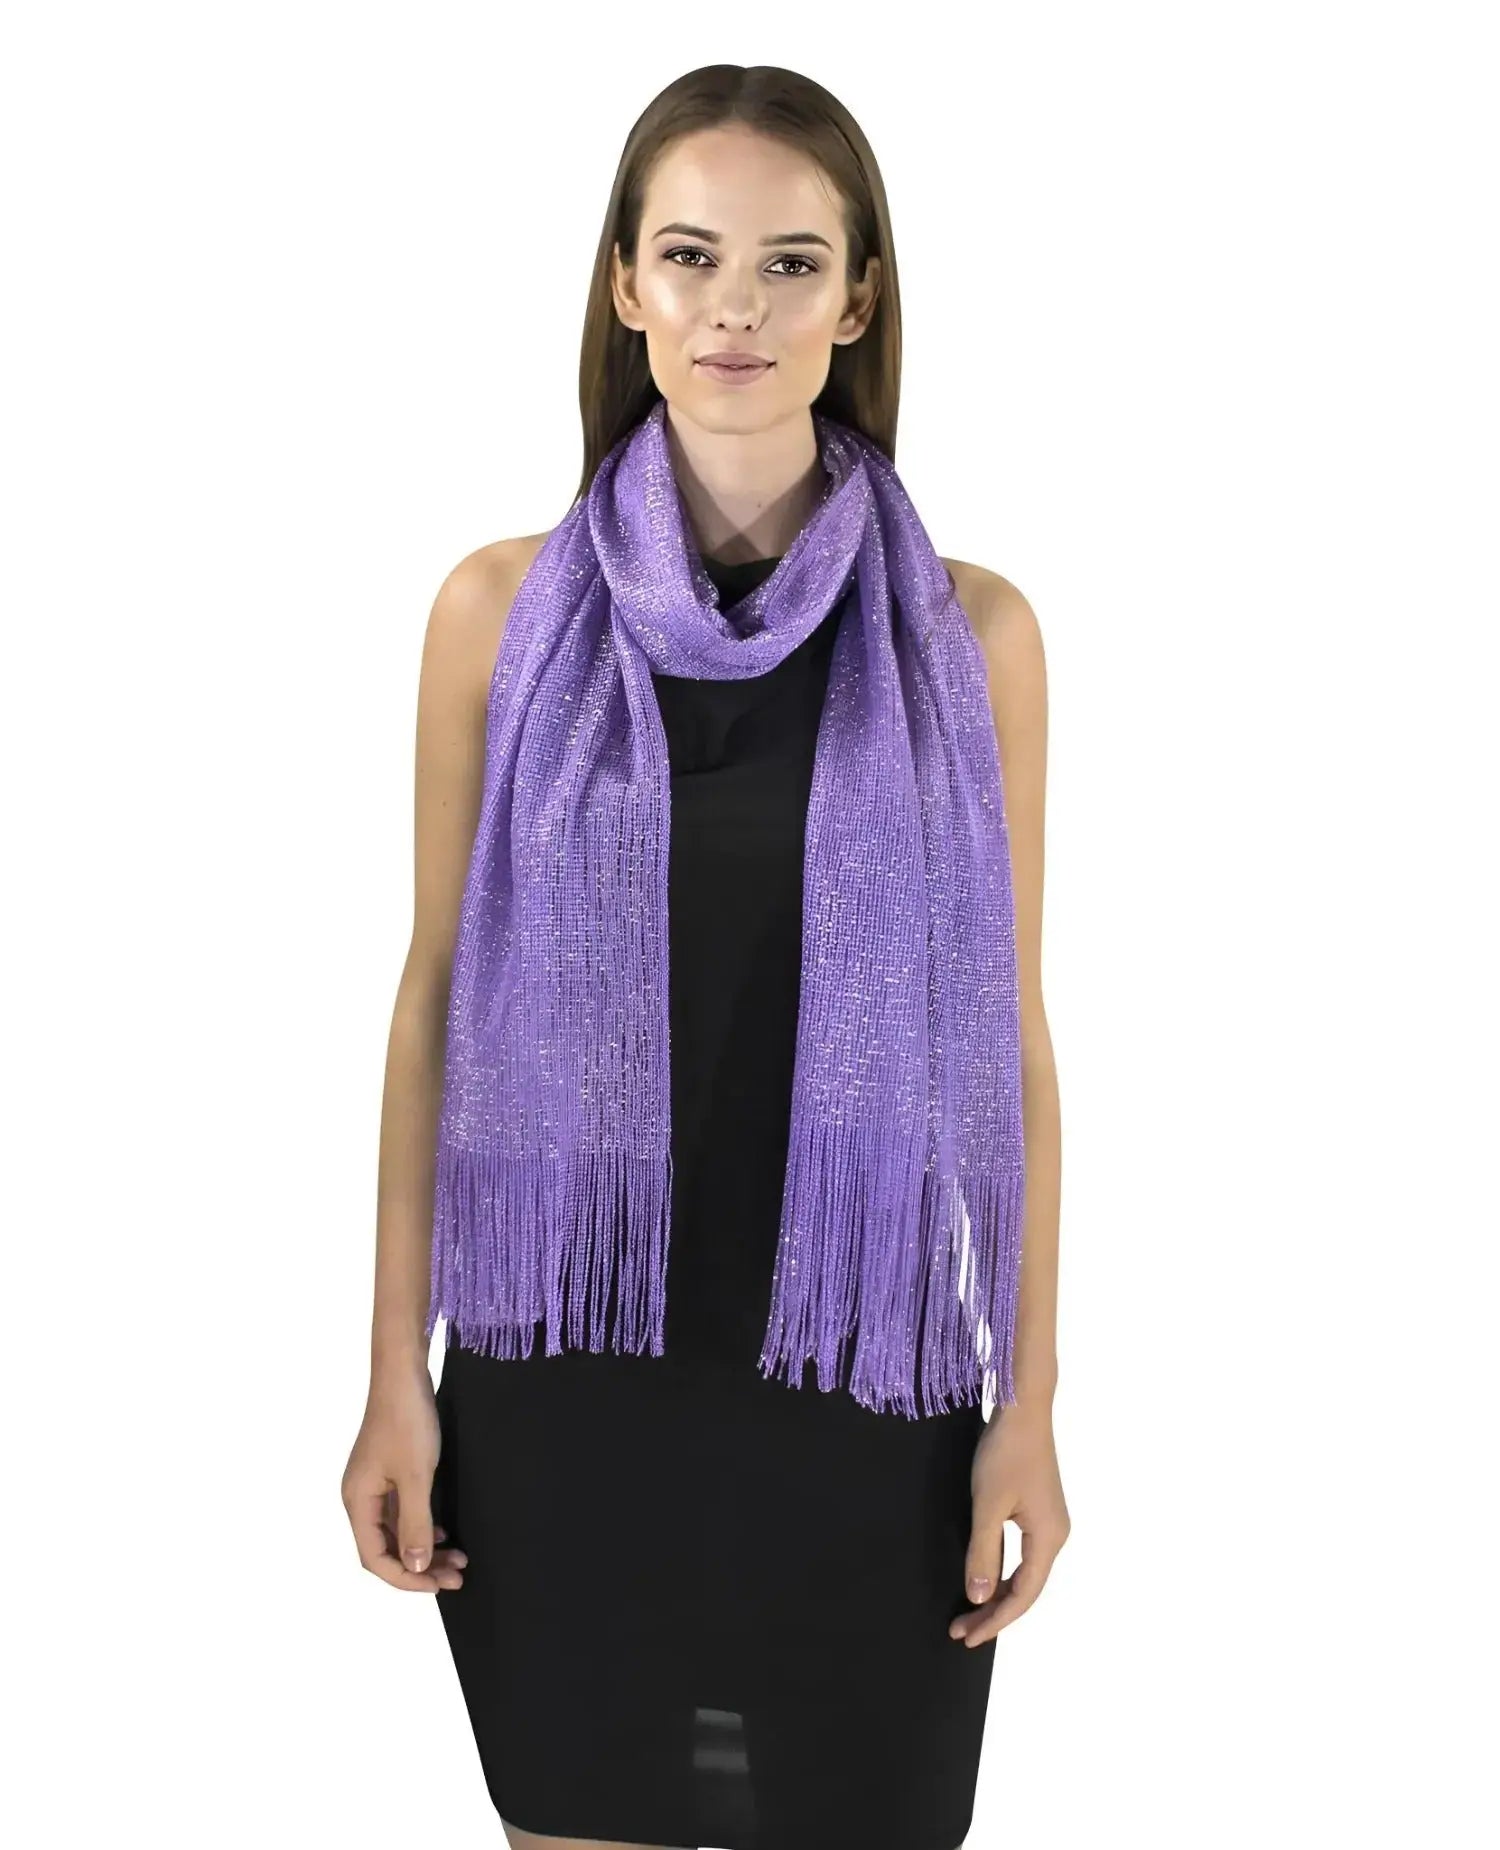 Lurex fishnet purple scarf for evening wear.